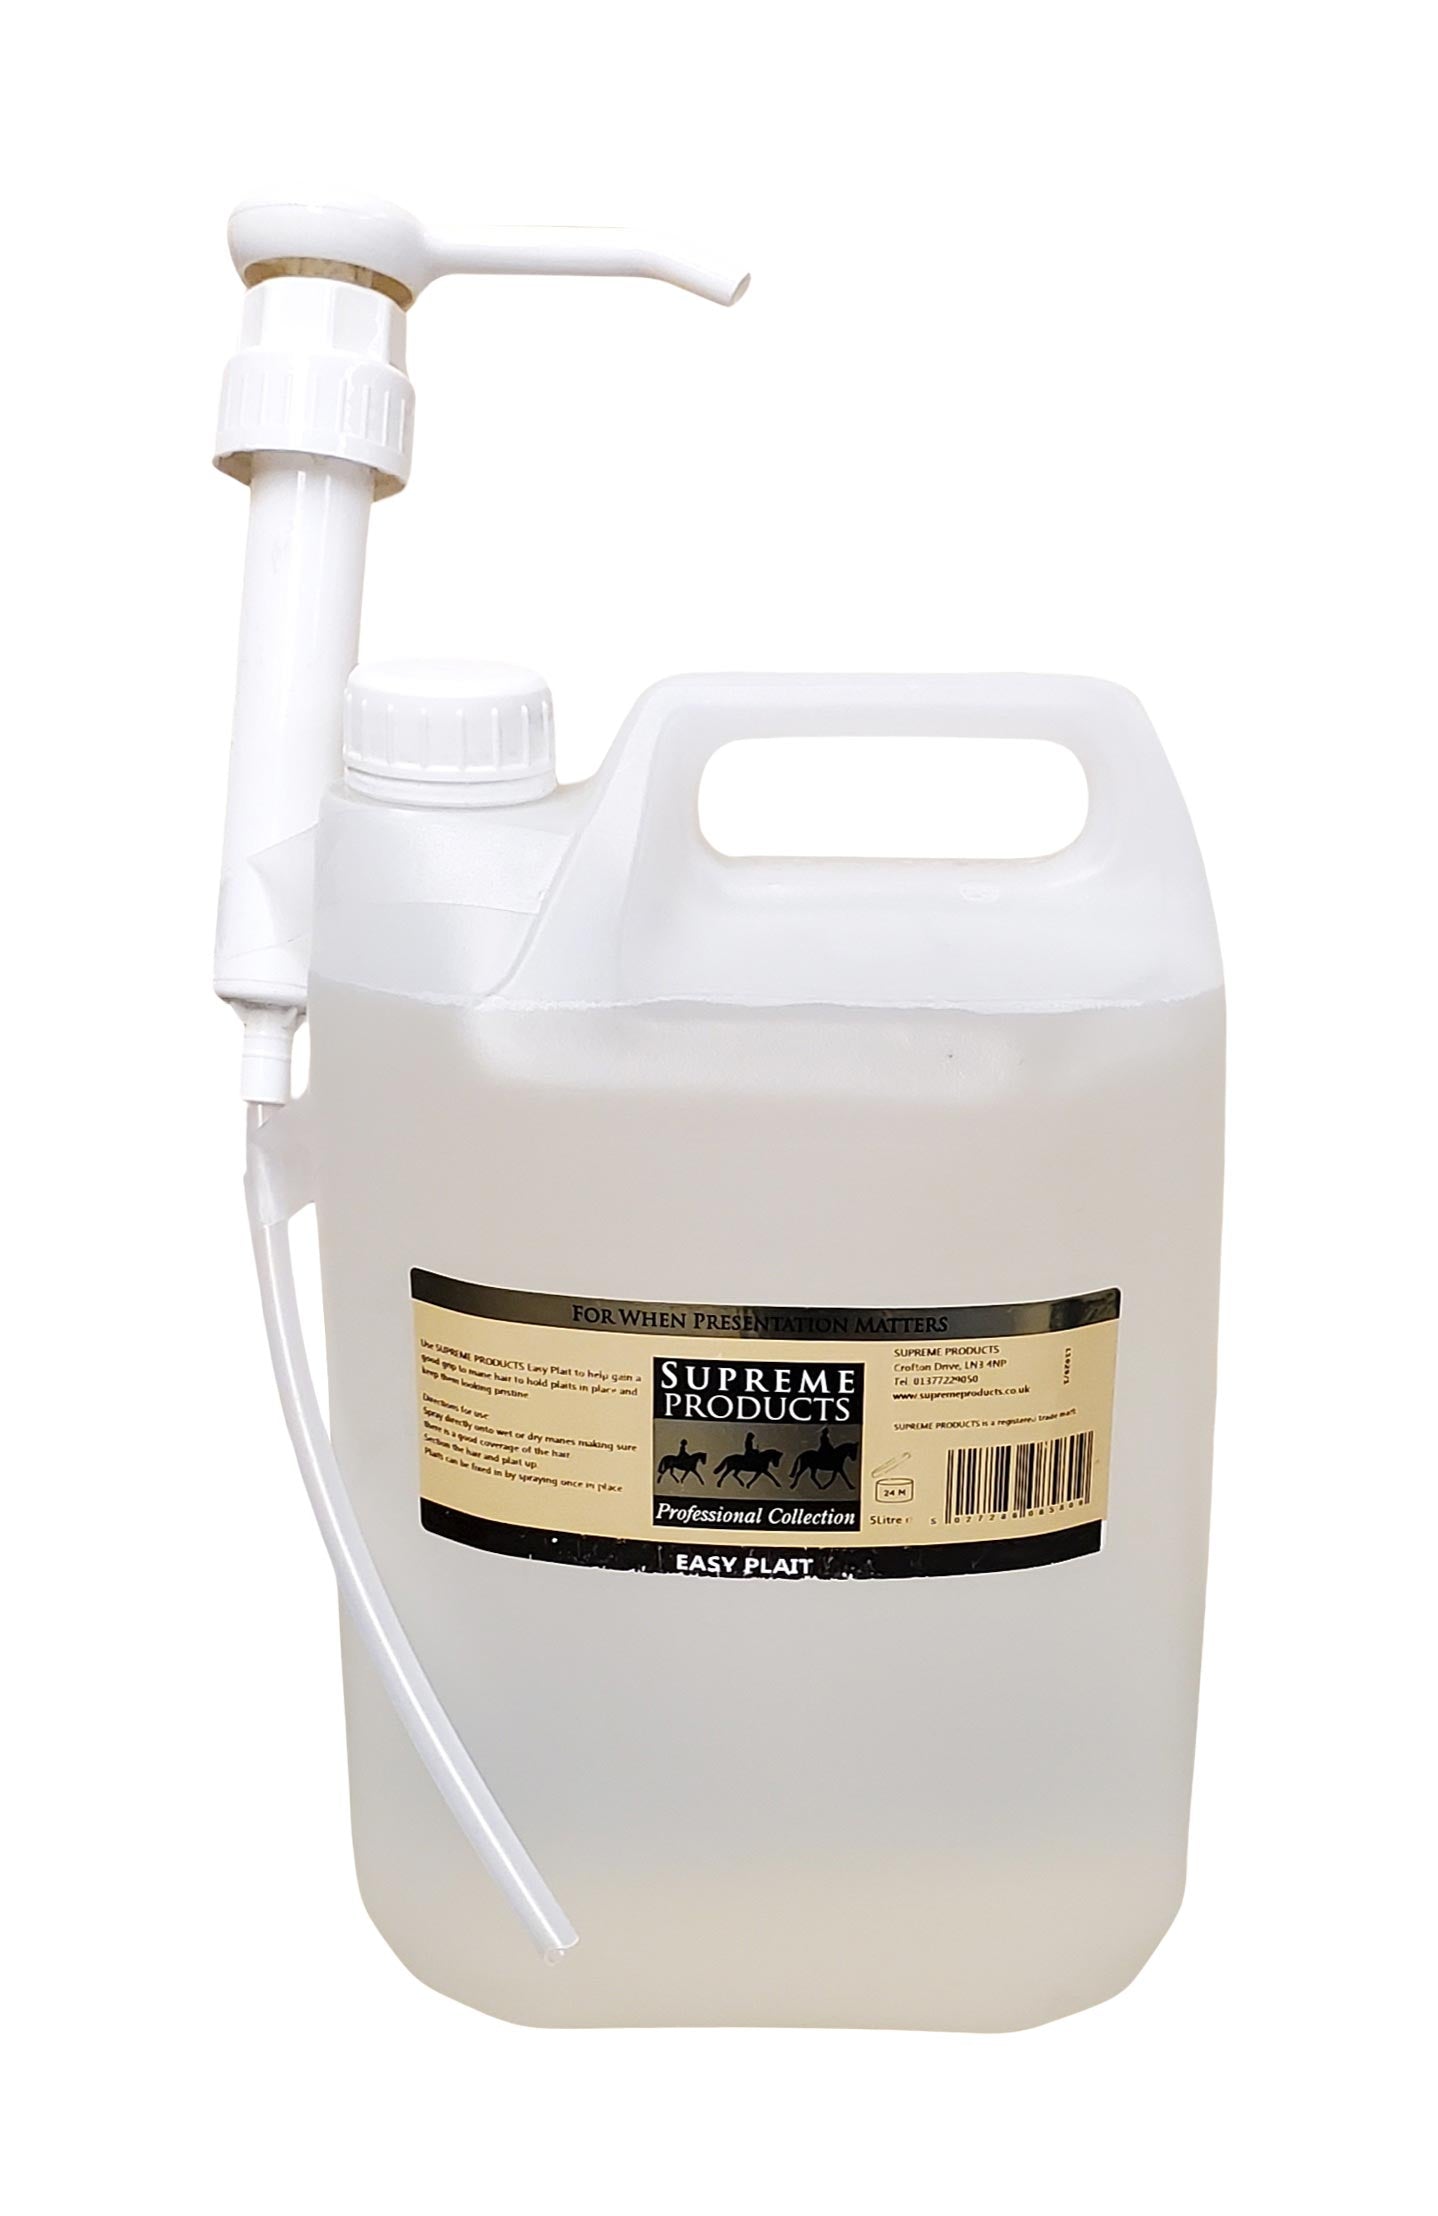 Supreme Products Easy Plait - 5 litre with pump